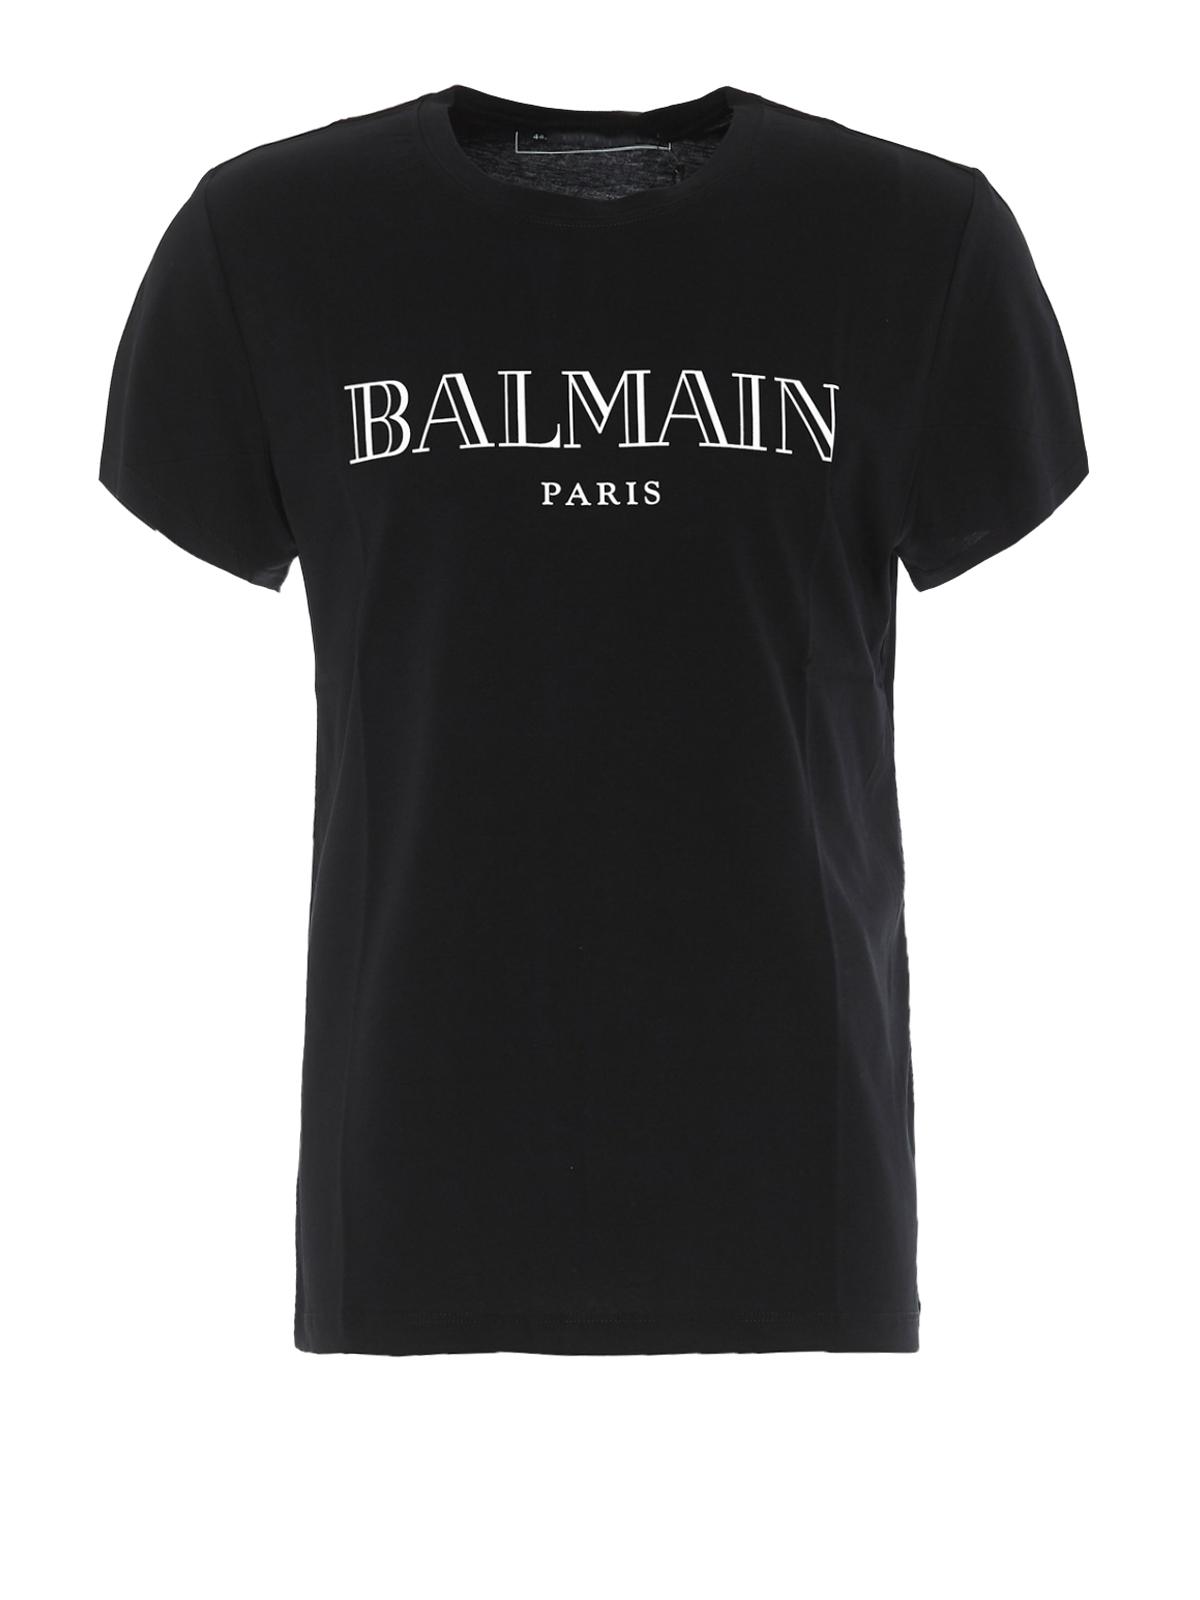 Balmain Logo Print Cotton T-shirt in Black,White (Black) for Men - Save ...